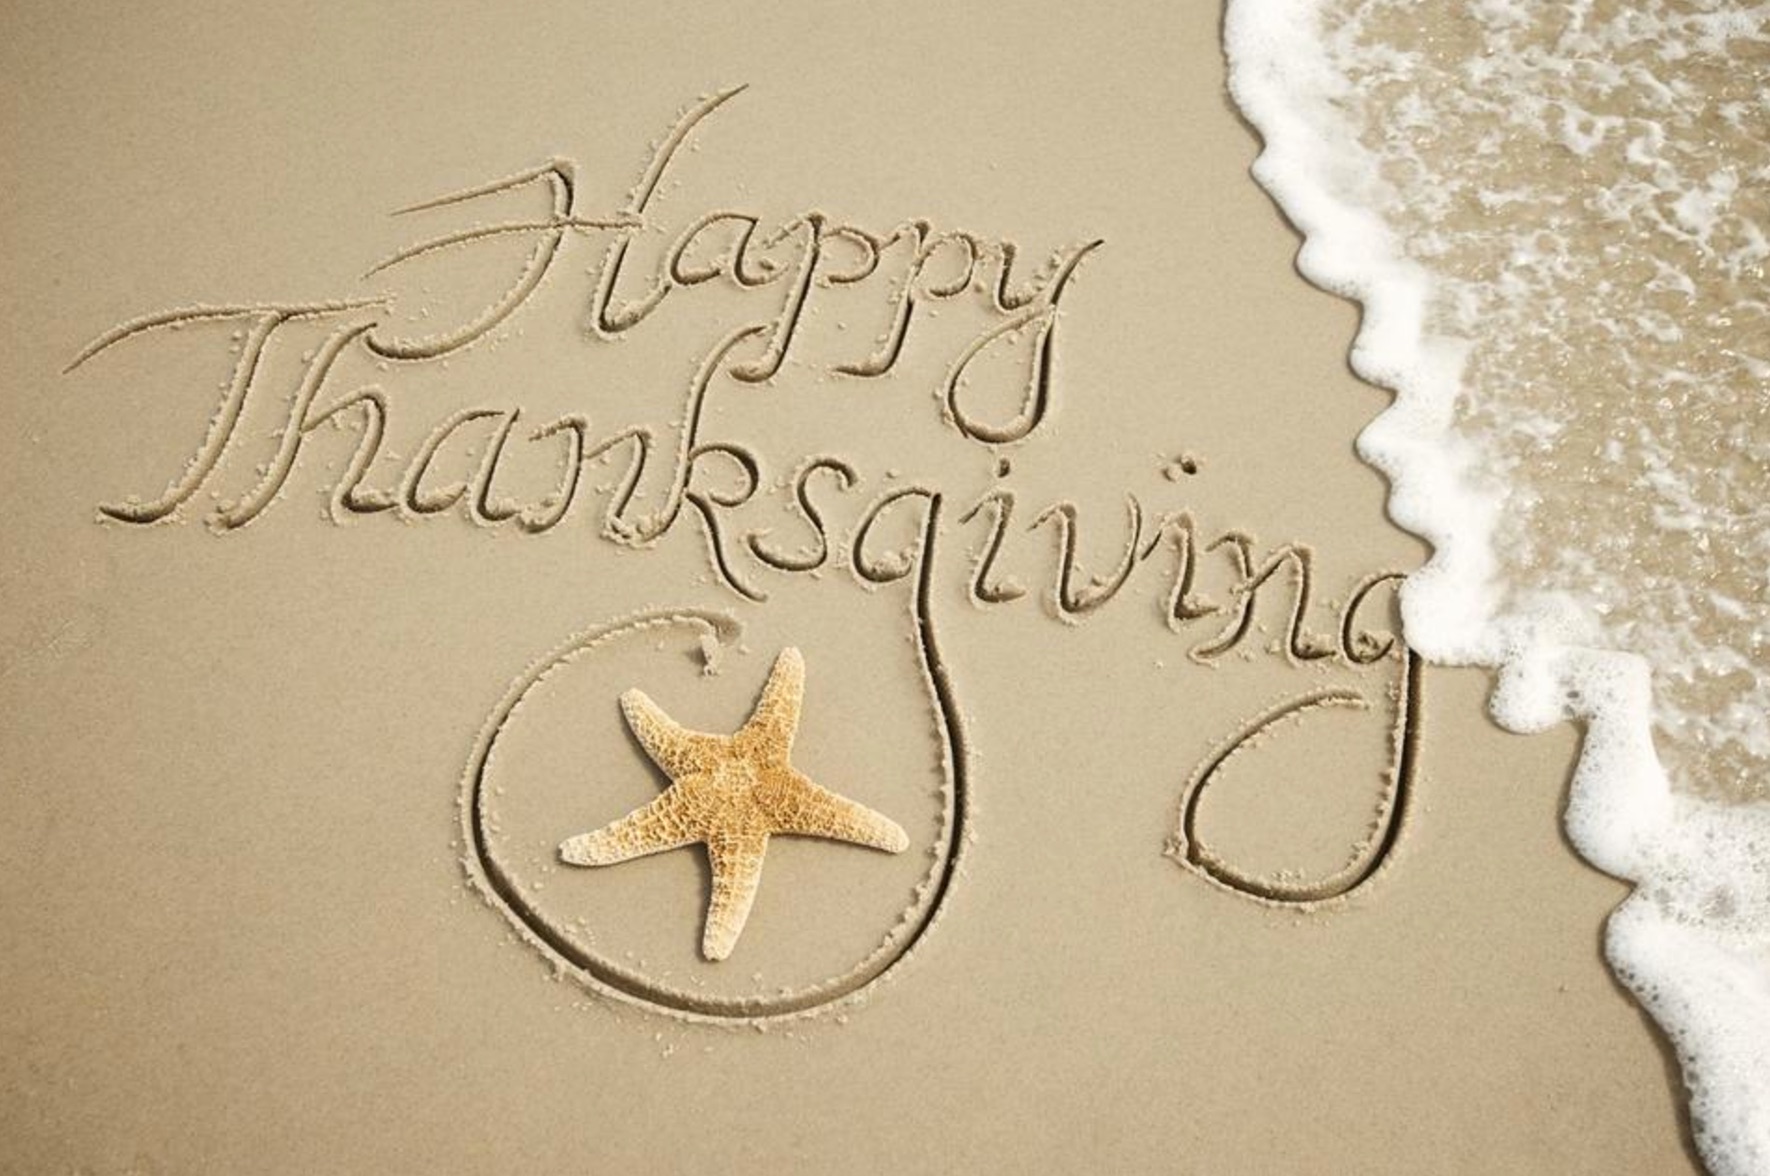 11 23 2017 Happy Thanksgiving sand writing